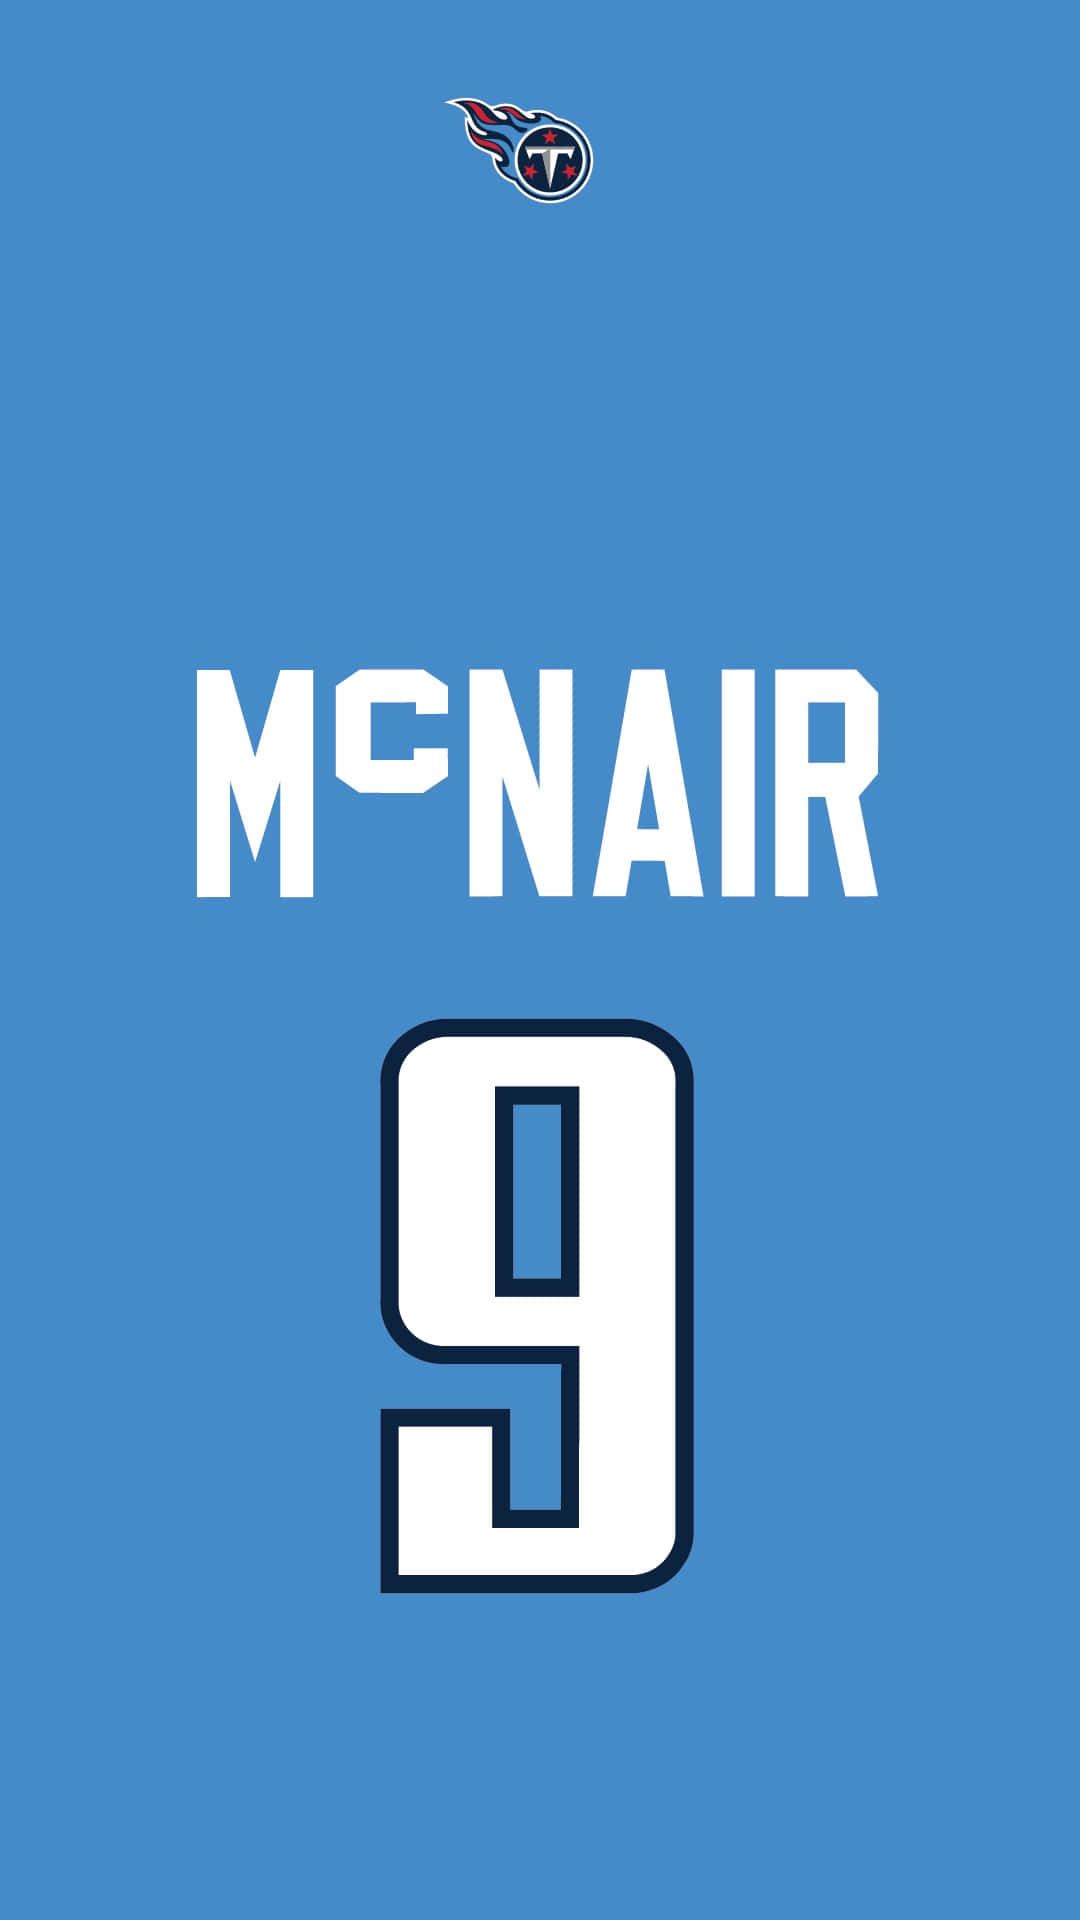 Mcnair 9 Tennessee Titans trøje Wallpaper